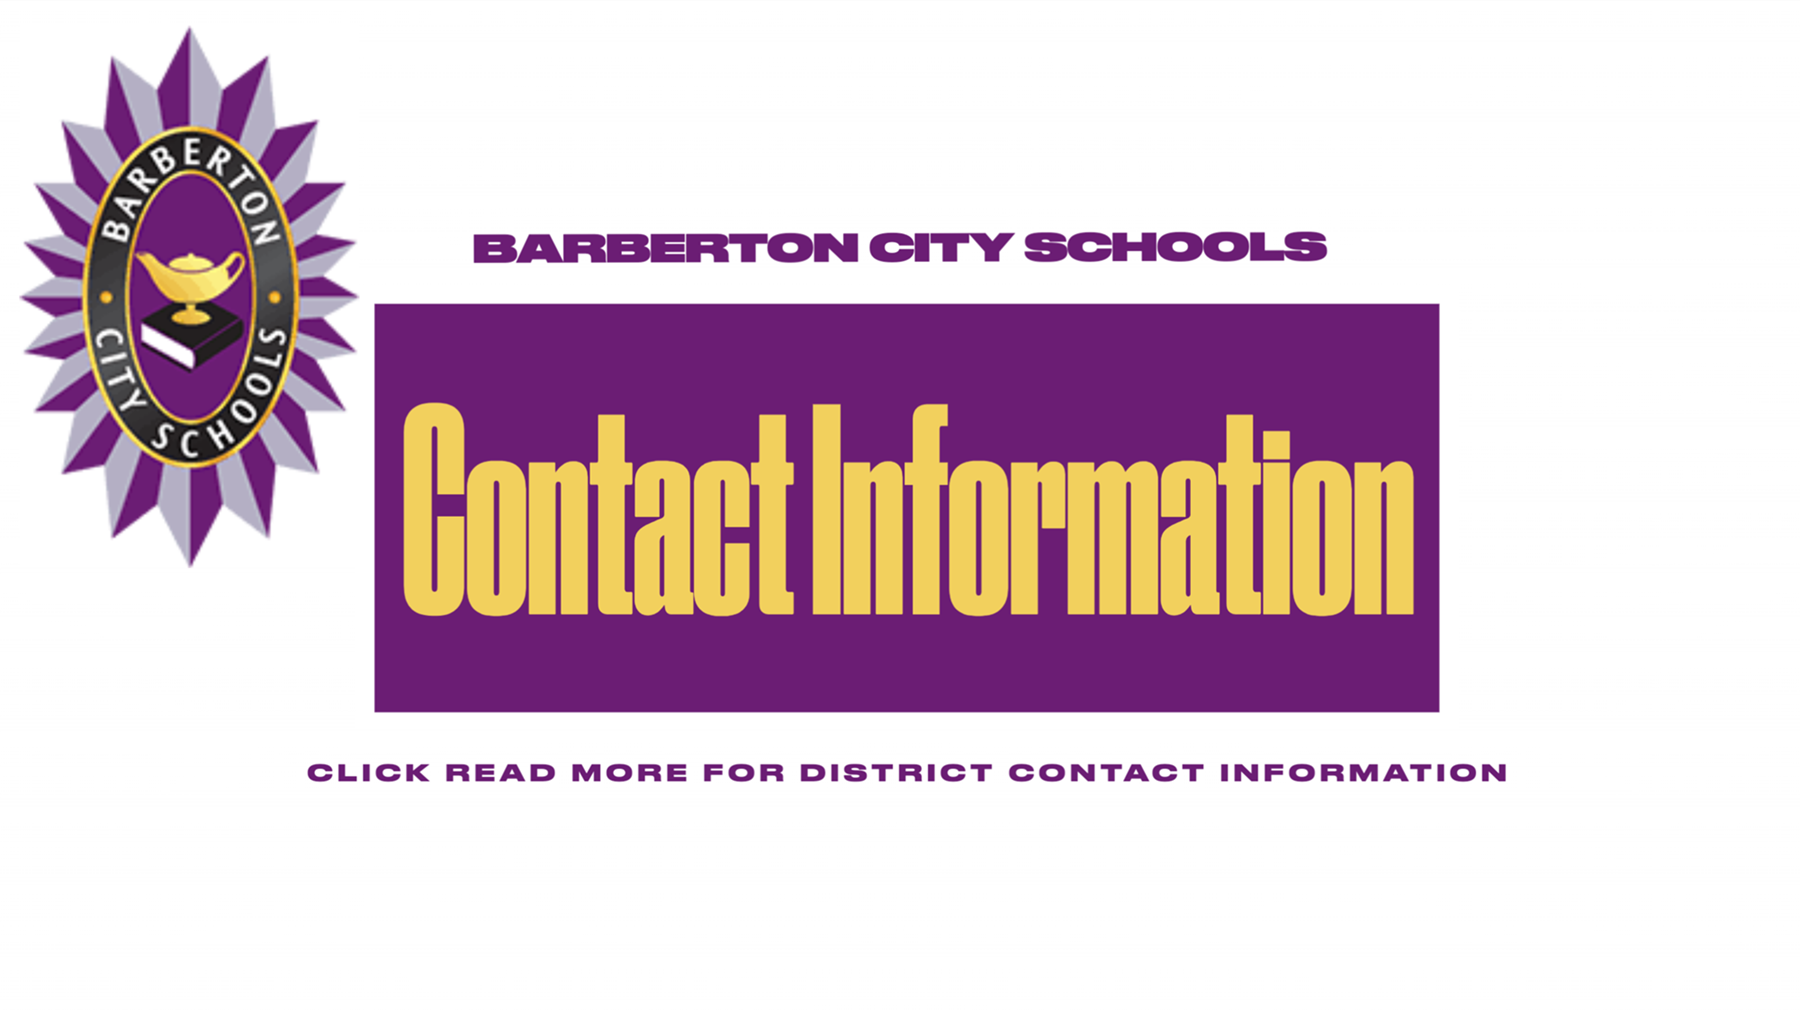 https://www.barbertonschools.org/DistrictContacts.aspx